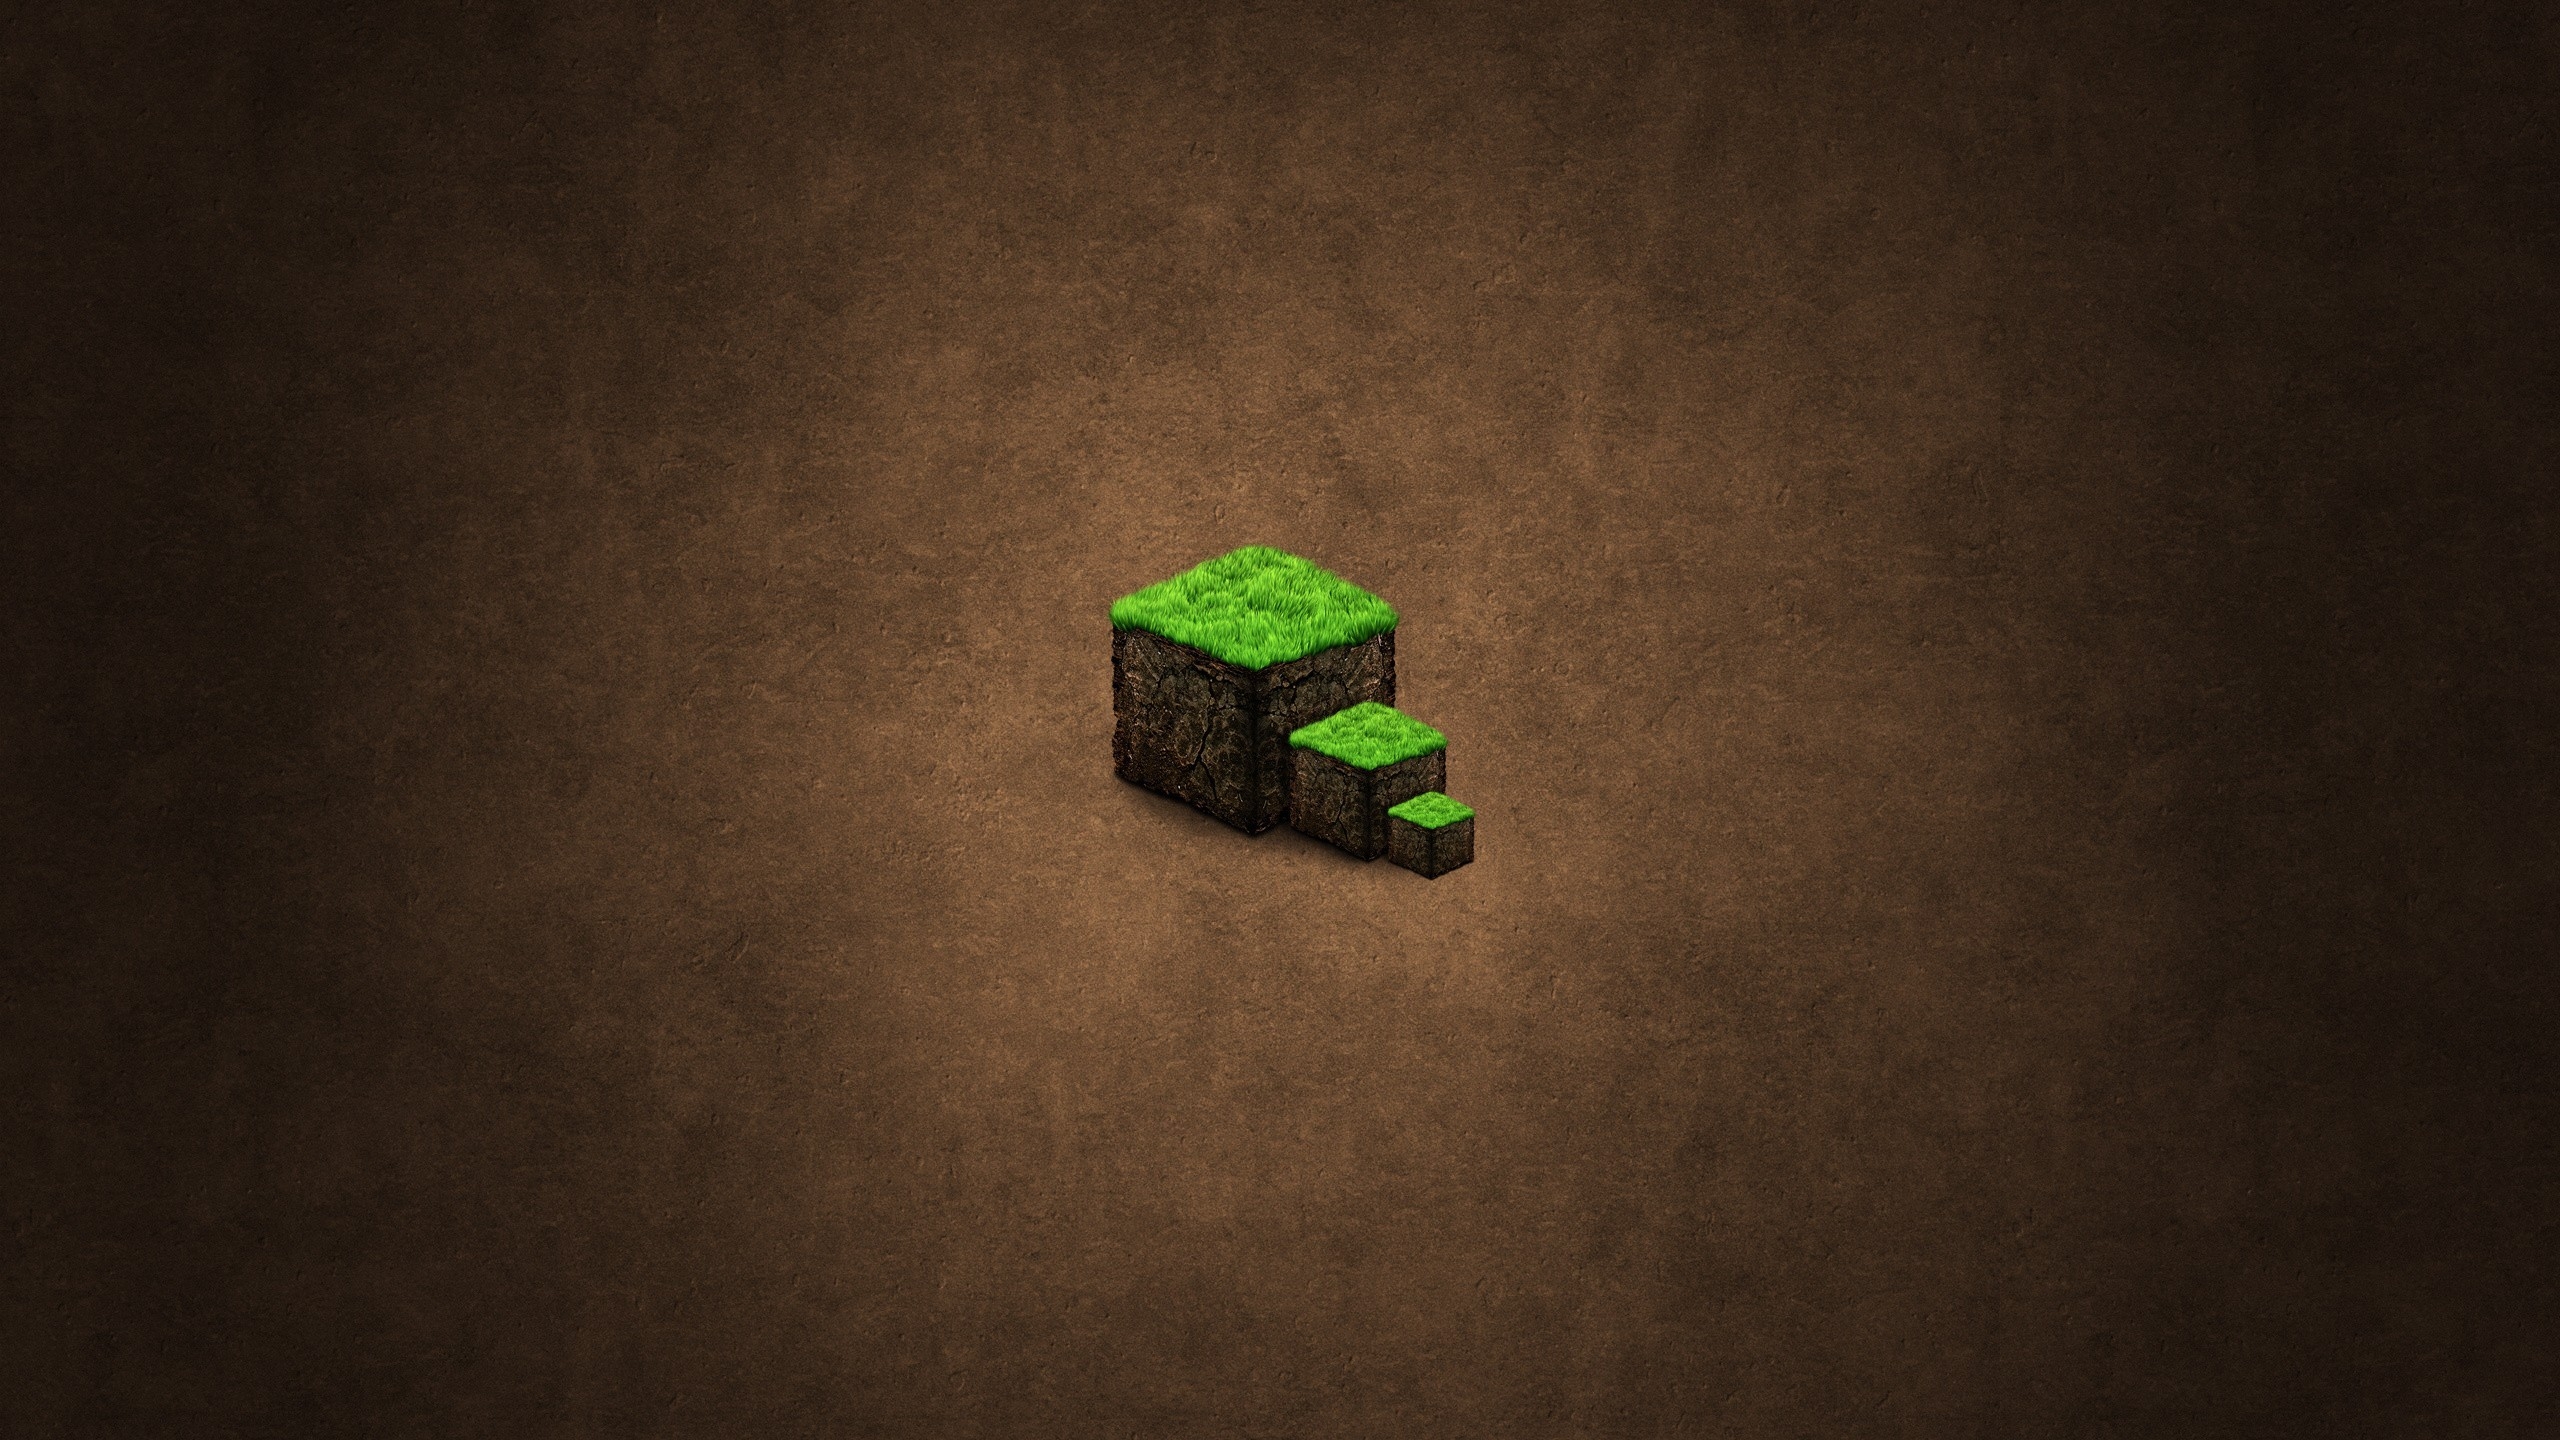 Minecraft Green Cubes for 2560x1440 HDTV resolution